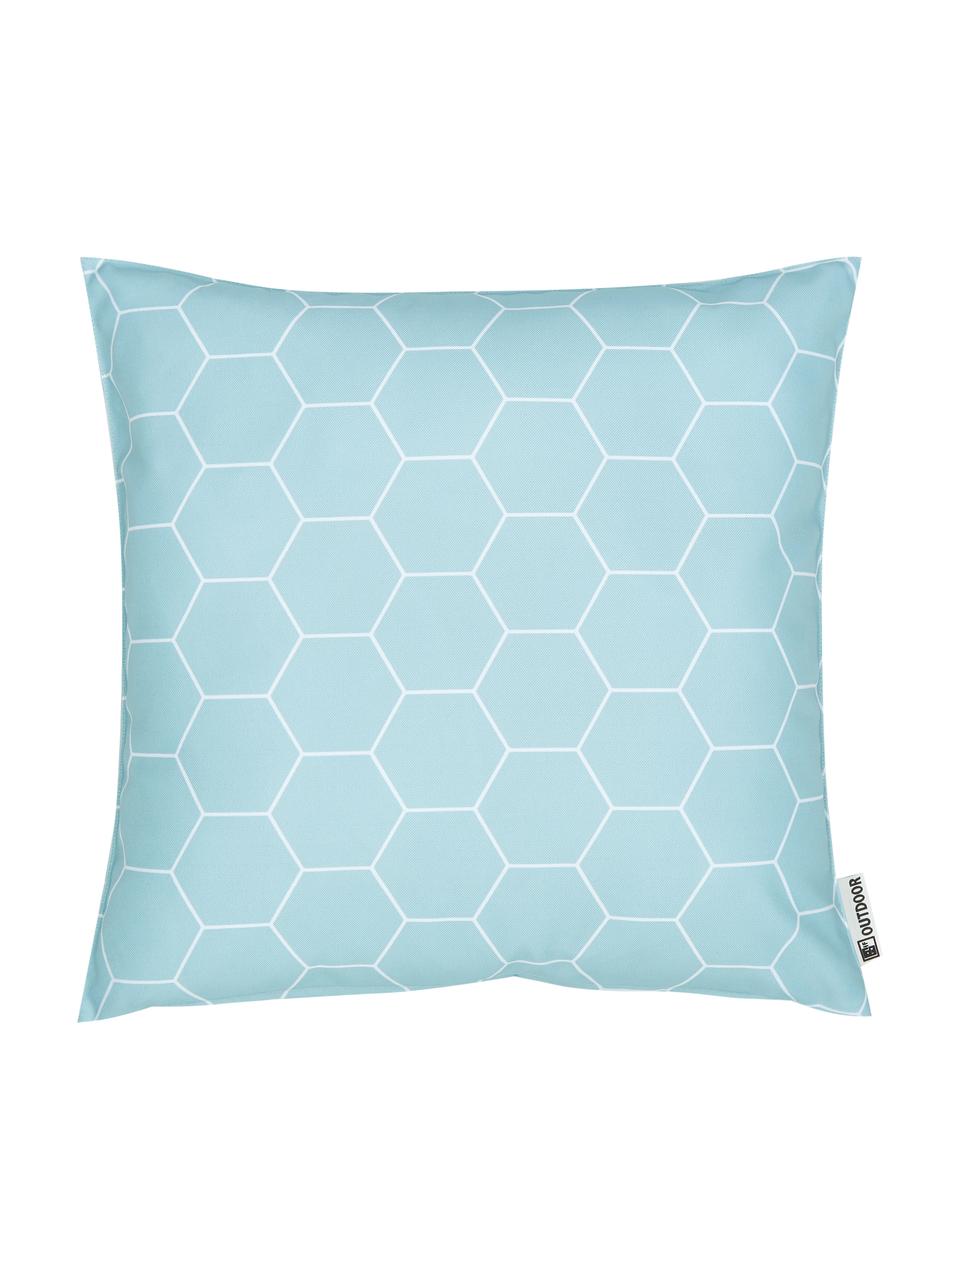 Coussin d'extérieur bleu Honeycomb, 100 % polyester, Bleu, blanc, larg. 47 x long. 47 cm